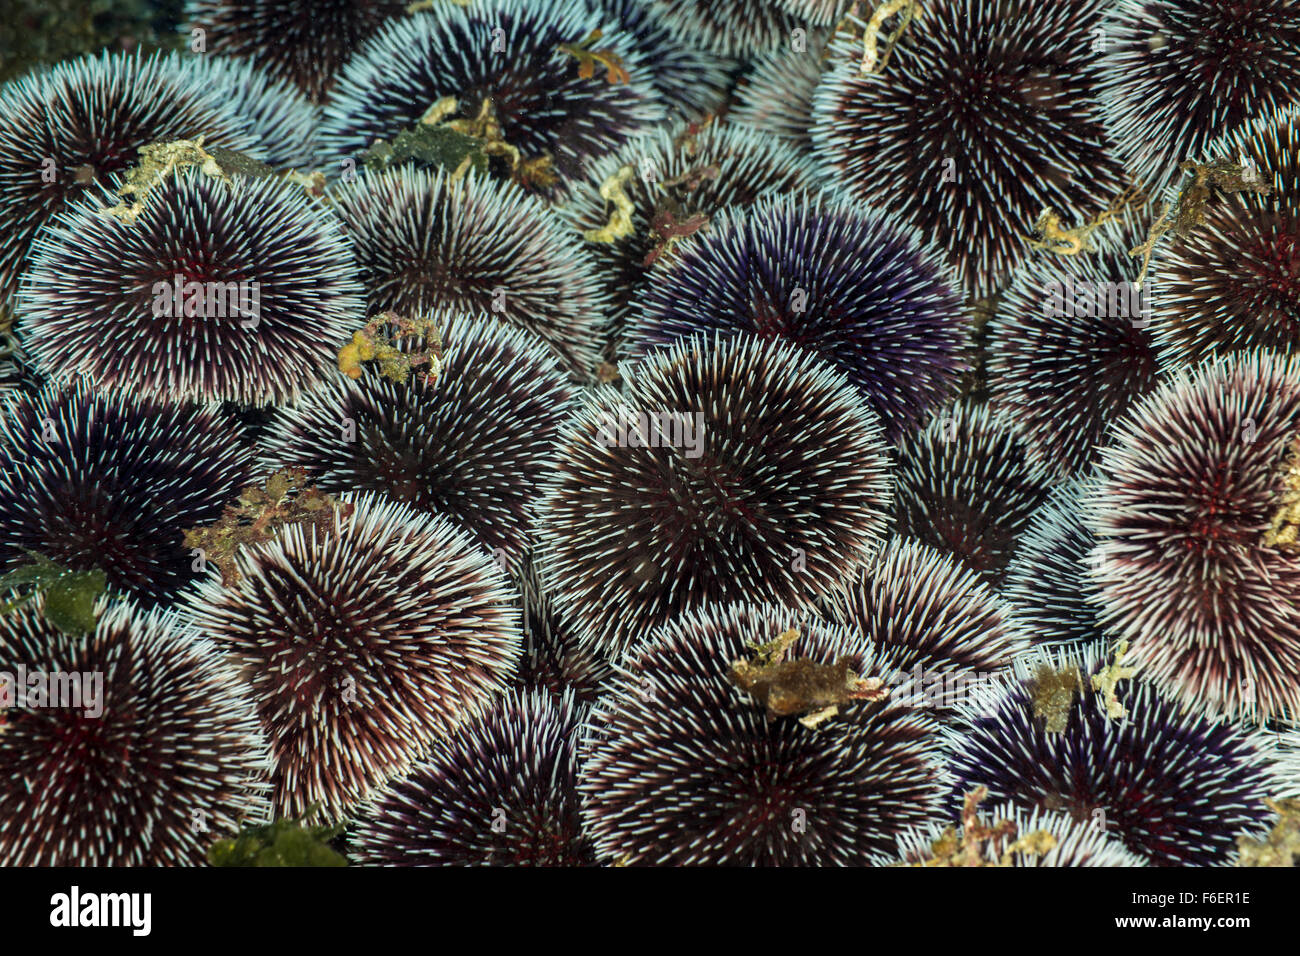 Viola ricci di mare, Sphaerechinus granularis korcula croazia Foto Stock